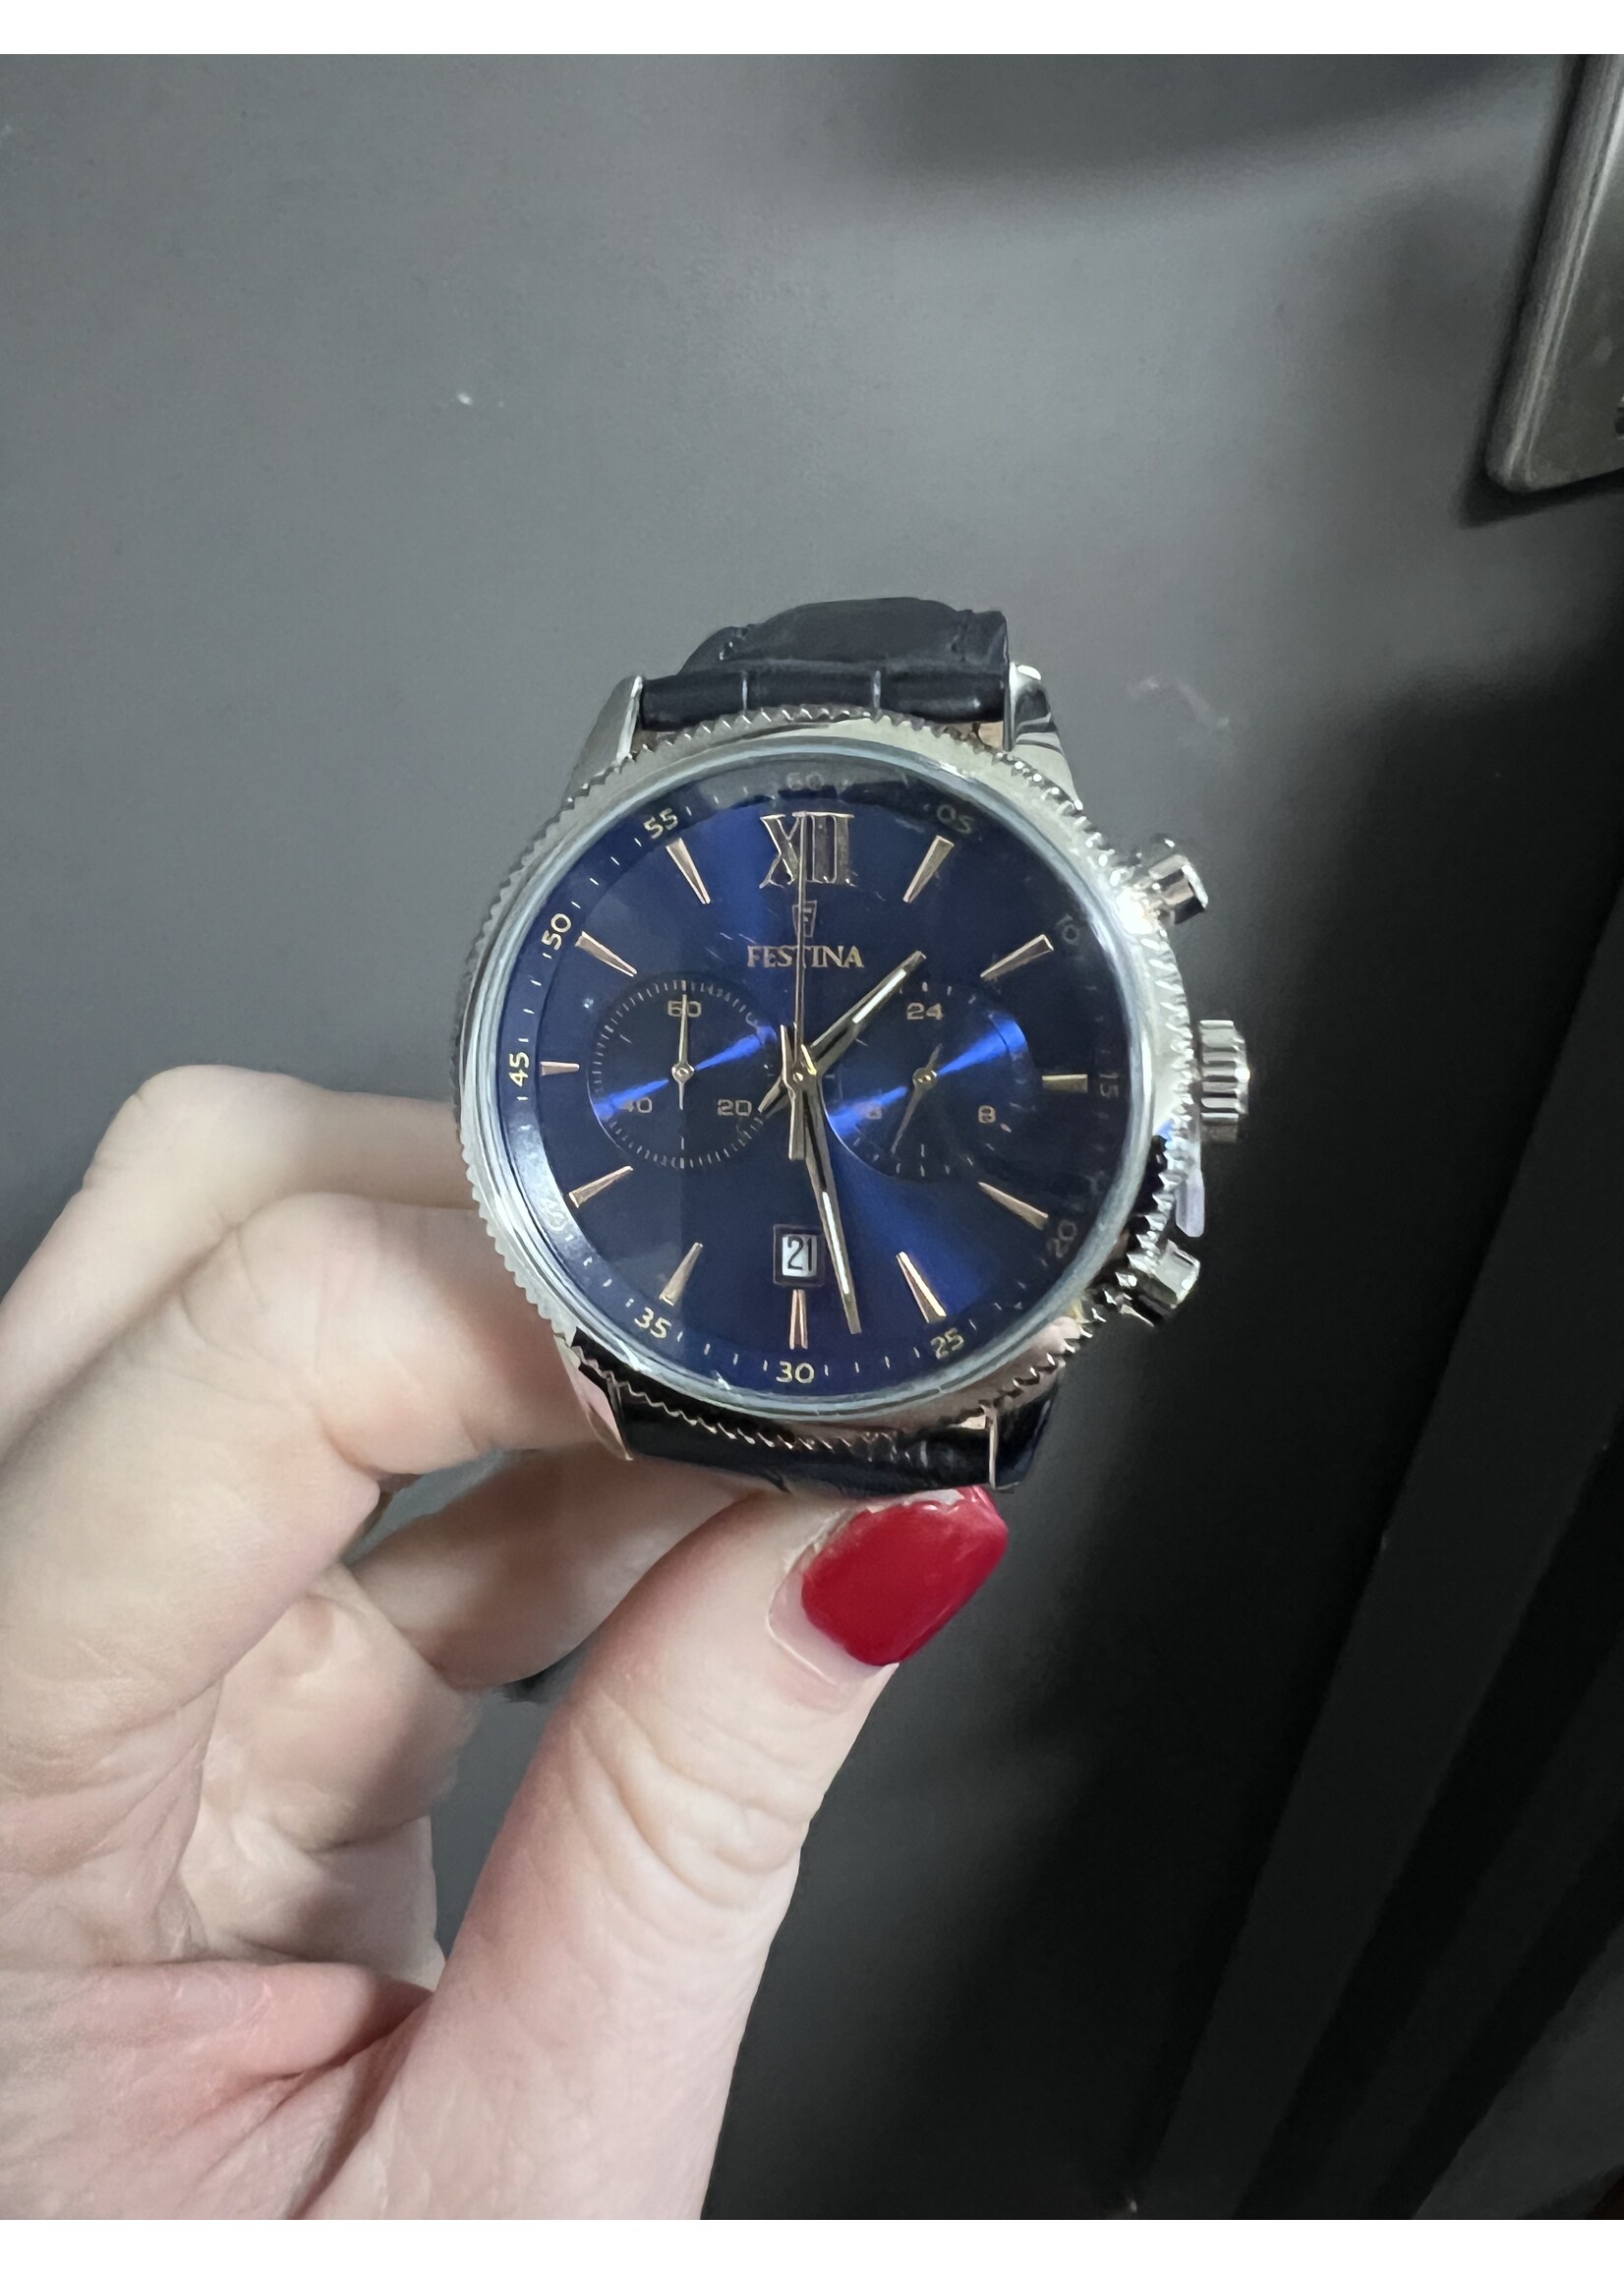 Festina Festina F16893 blauw chronograaf horloge